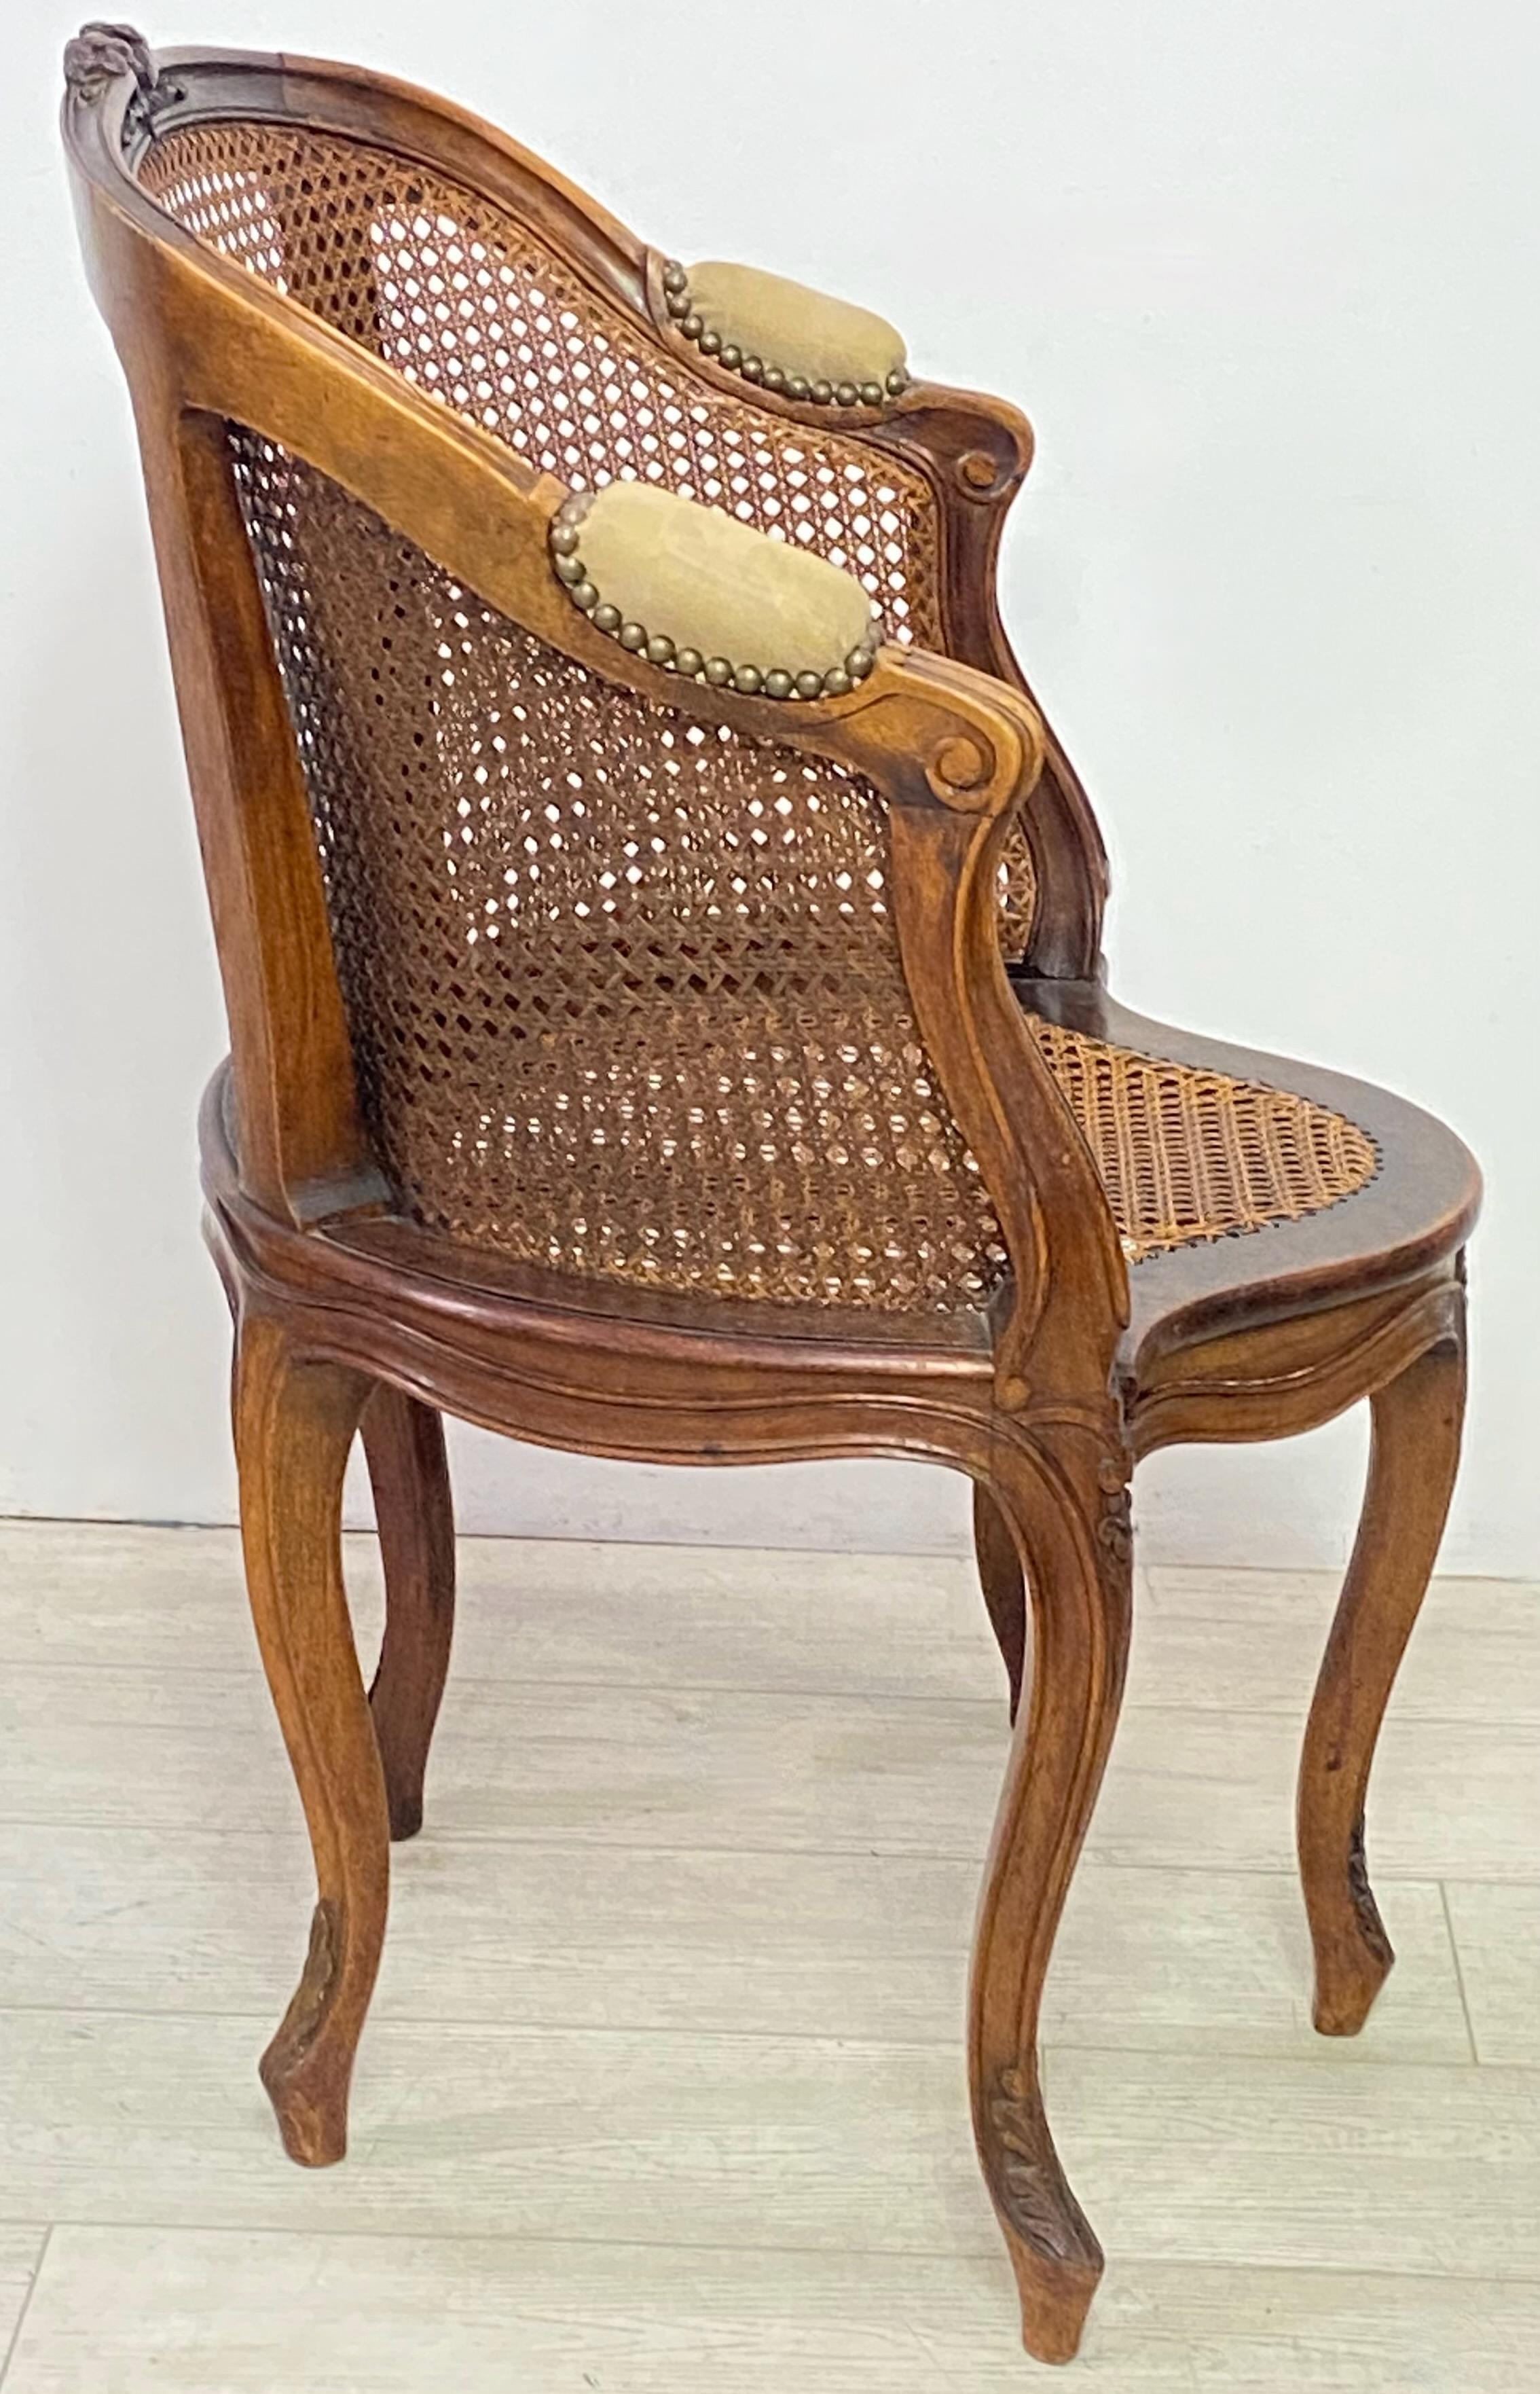 Cane French Louis XV Style Walnut Fauteuil de Bureau Desk Chair, Late 19th Century